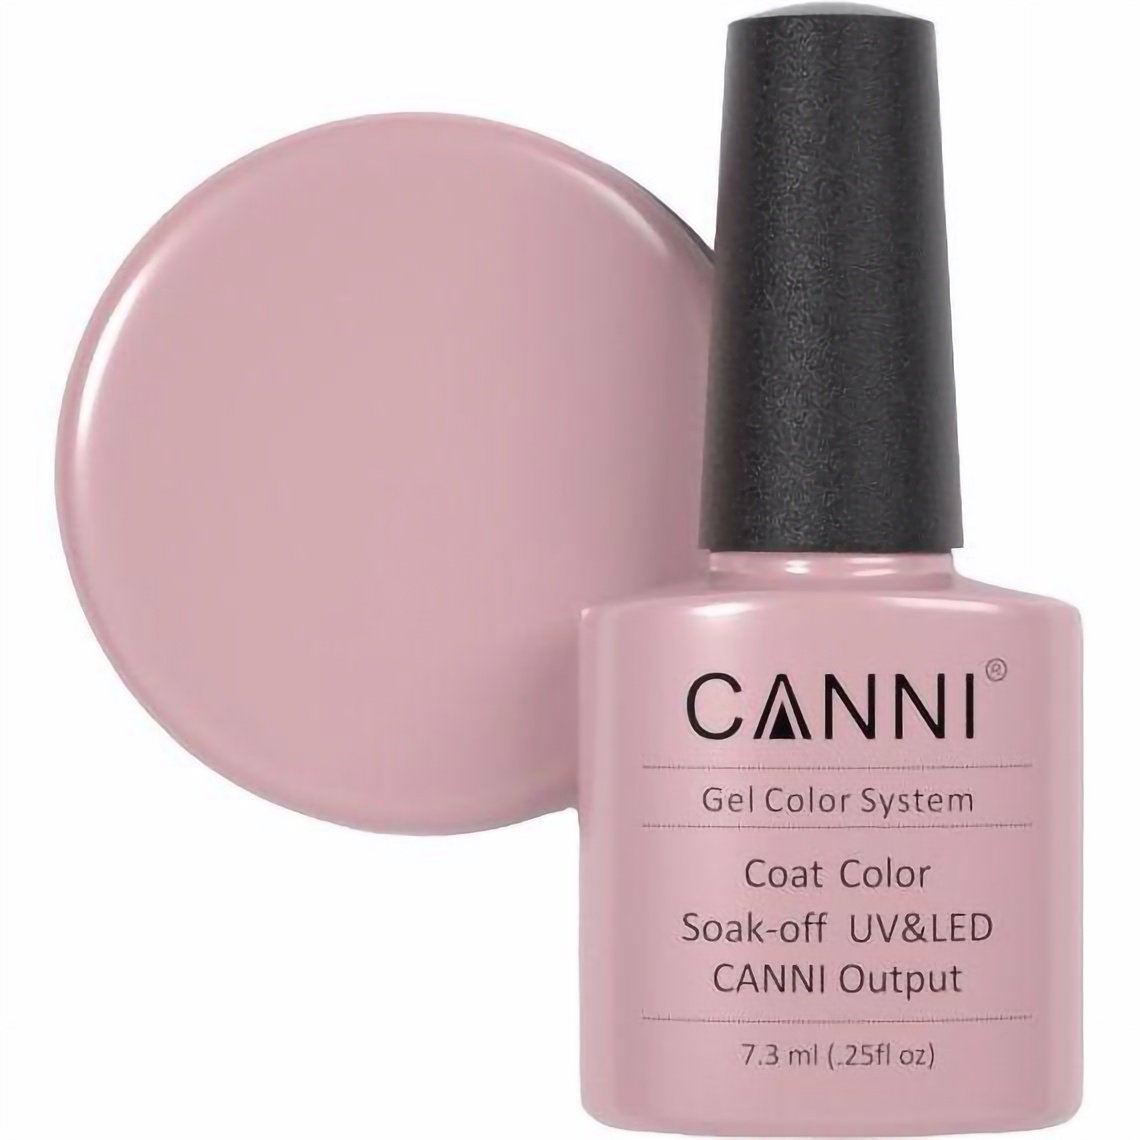 Гель-лак Canni Color Coat Soak-off UV&LED 242 бледный розово-серый 7.3 мл - фото 1